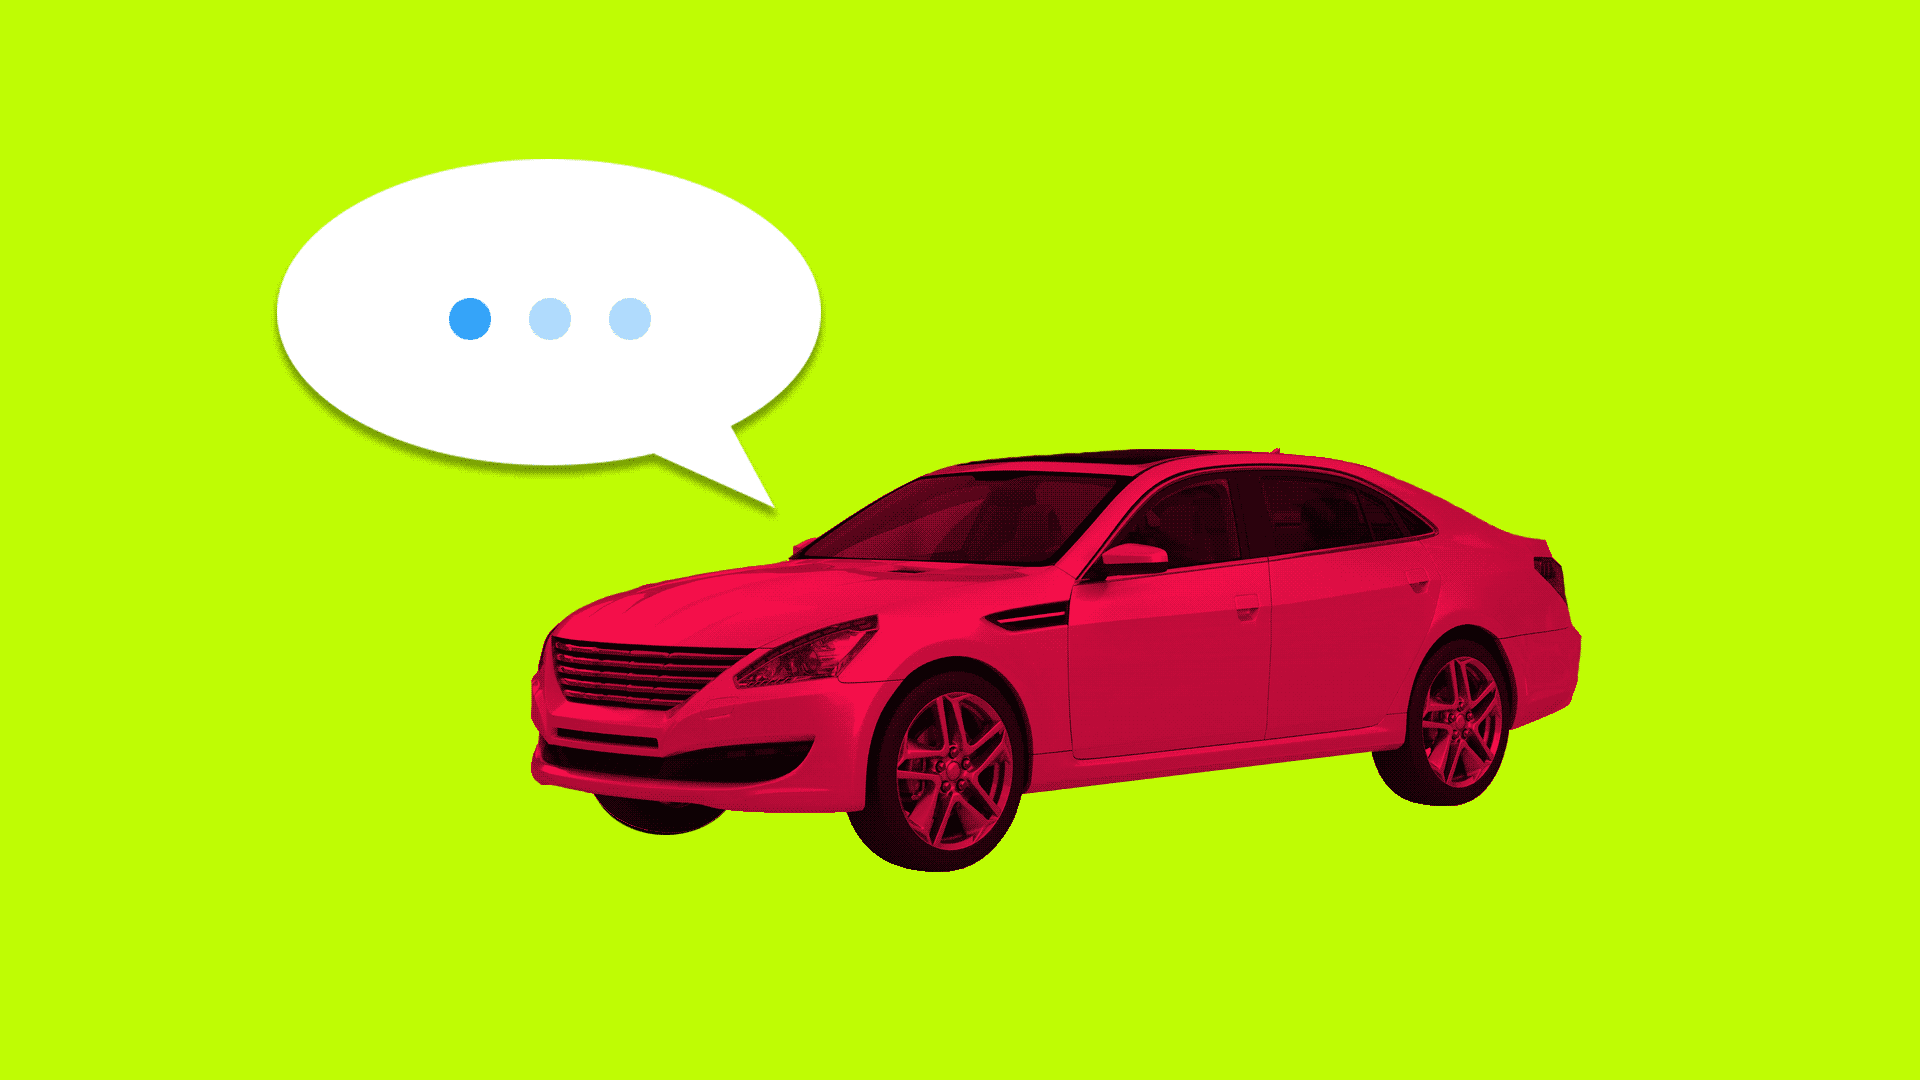 A sedan with thinking dots